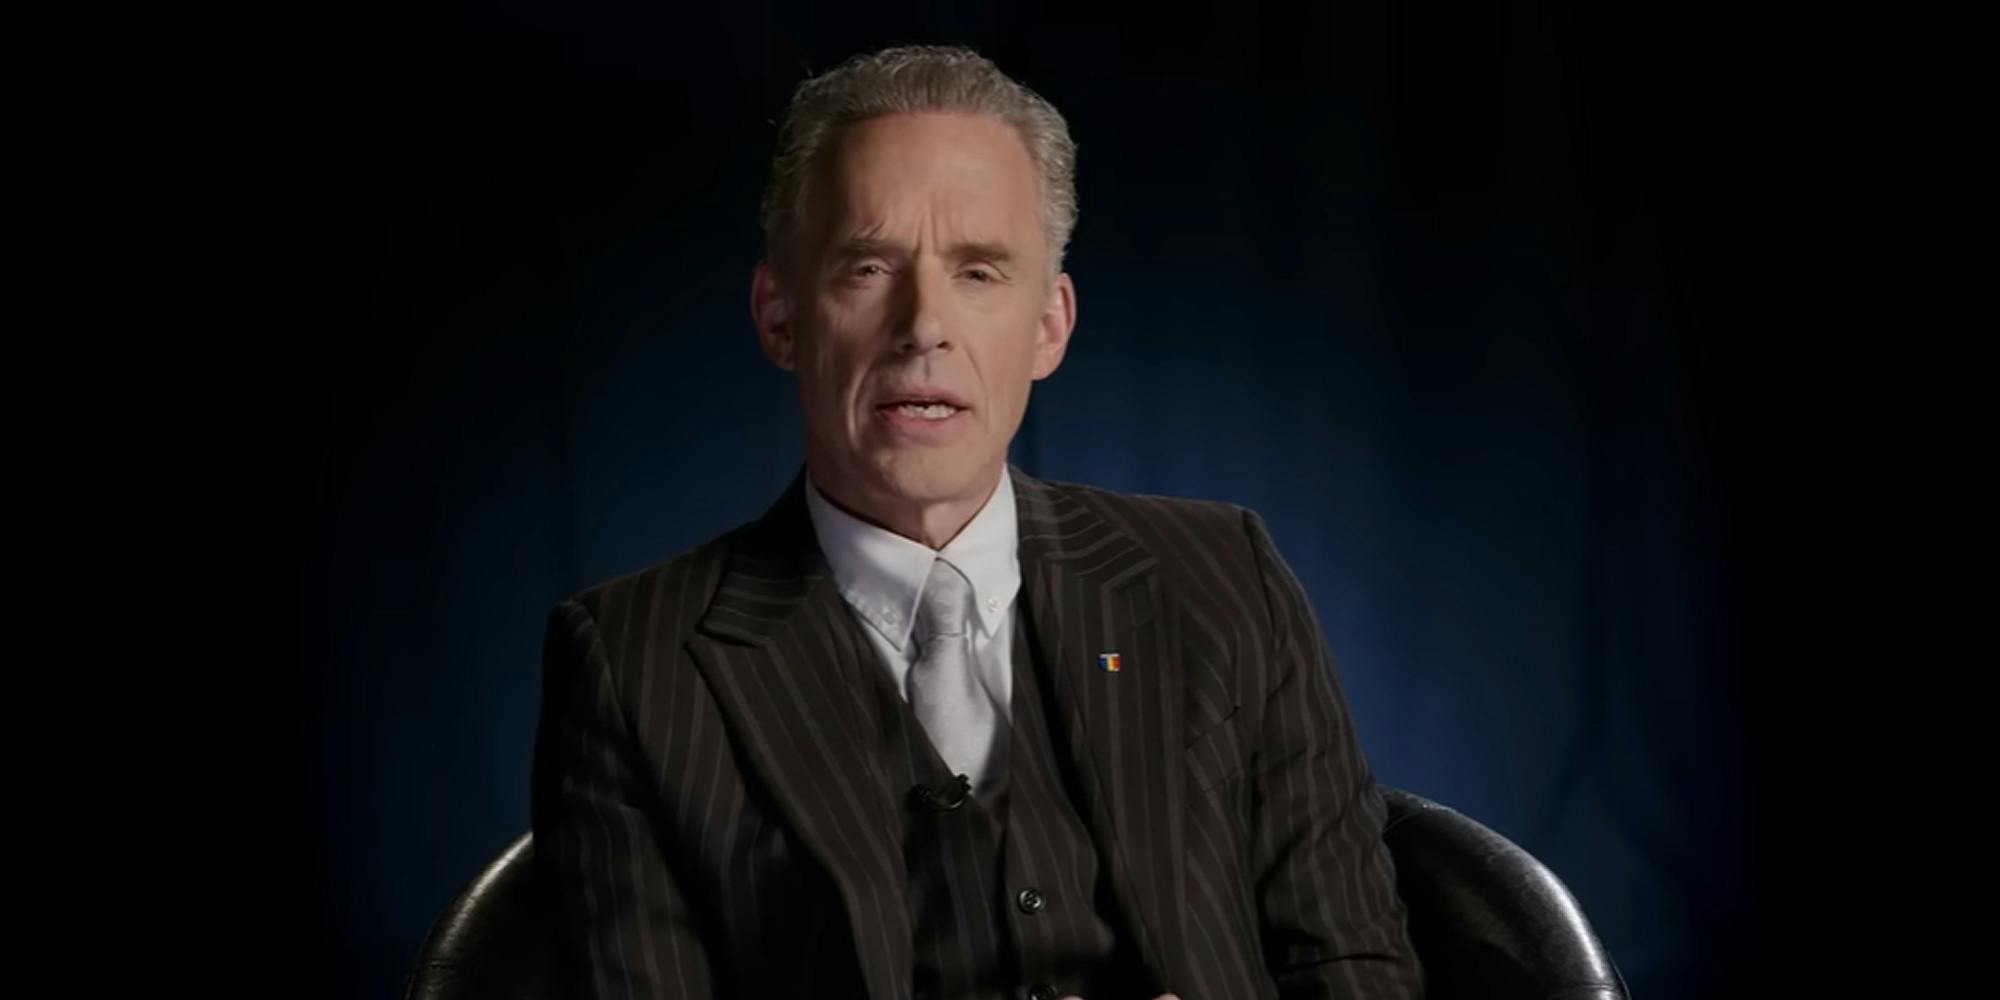 Jordan Peterson sitting in chair speaking on dark blue background (c)